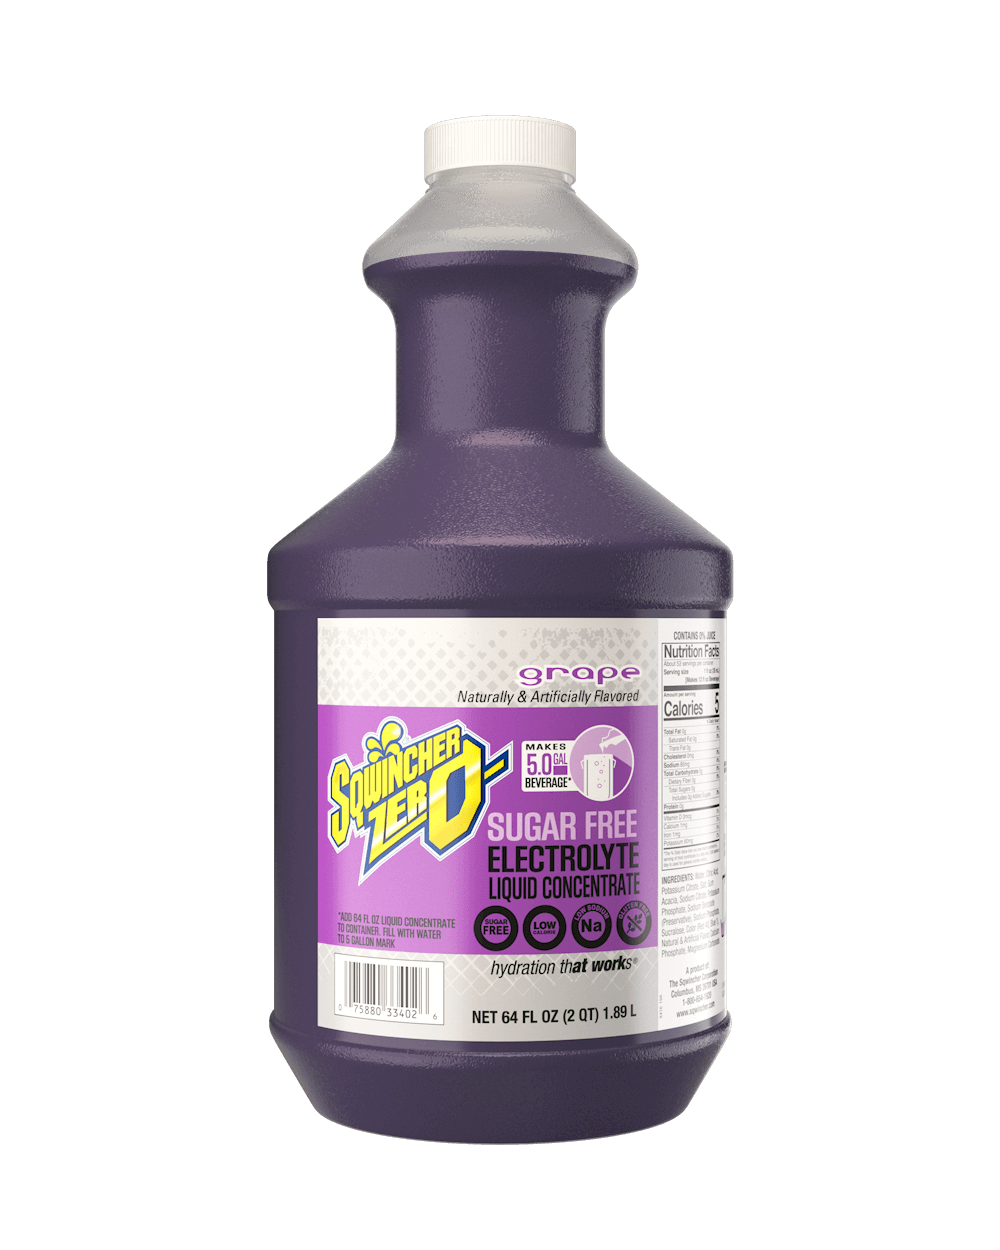 A purple liquid bottle with a white cap.